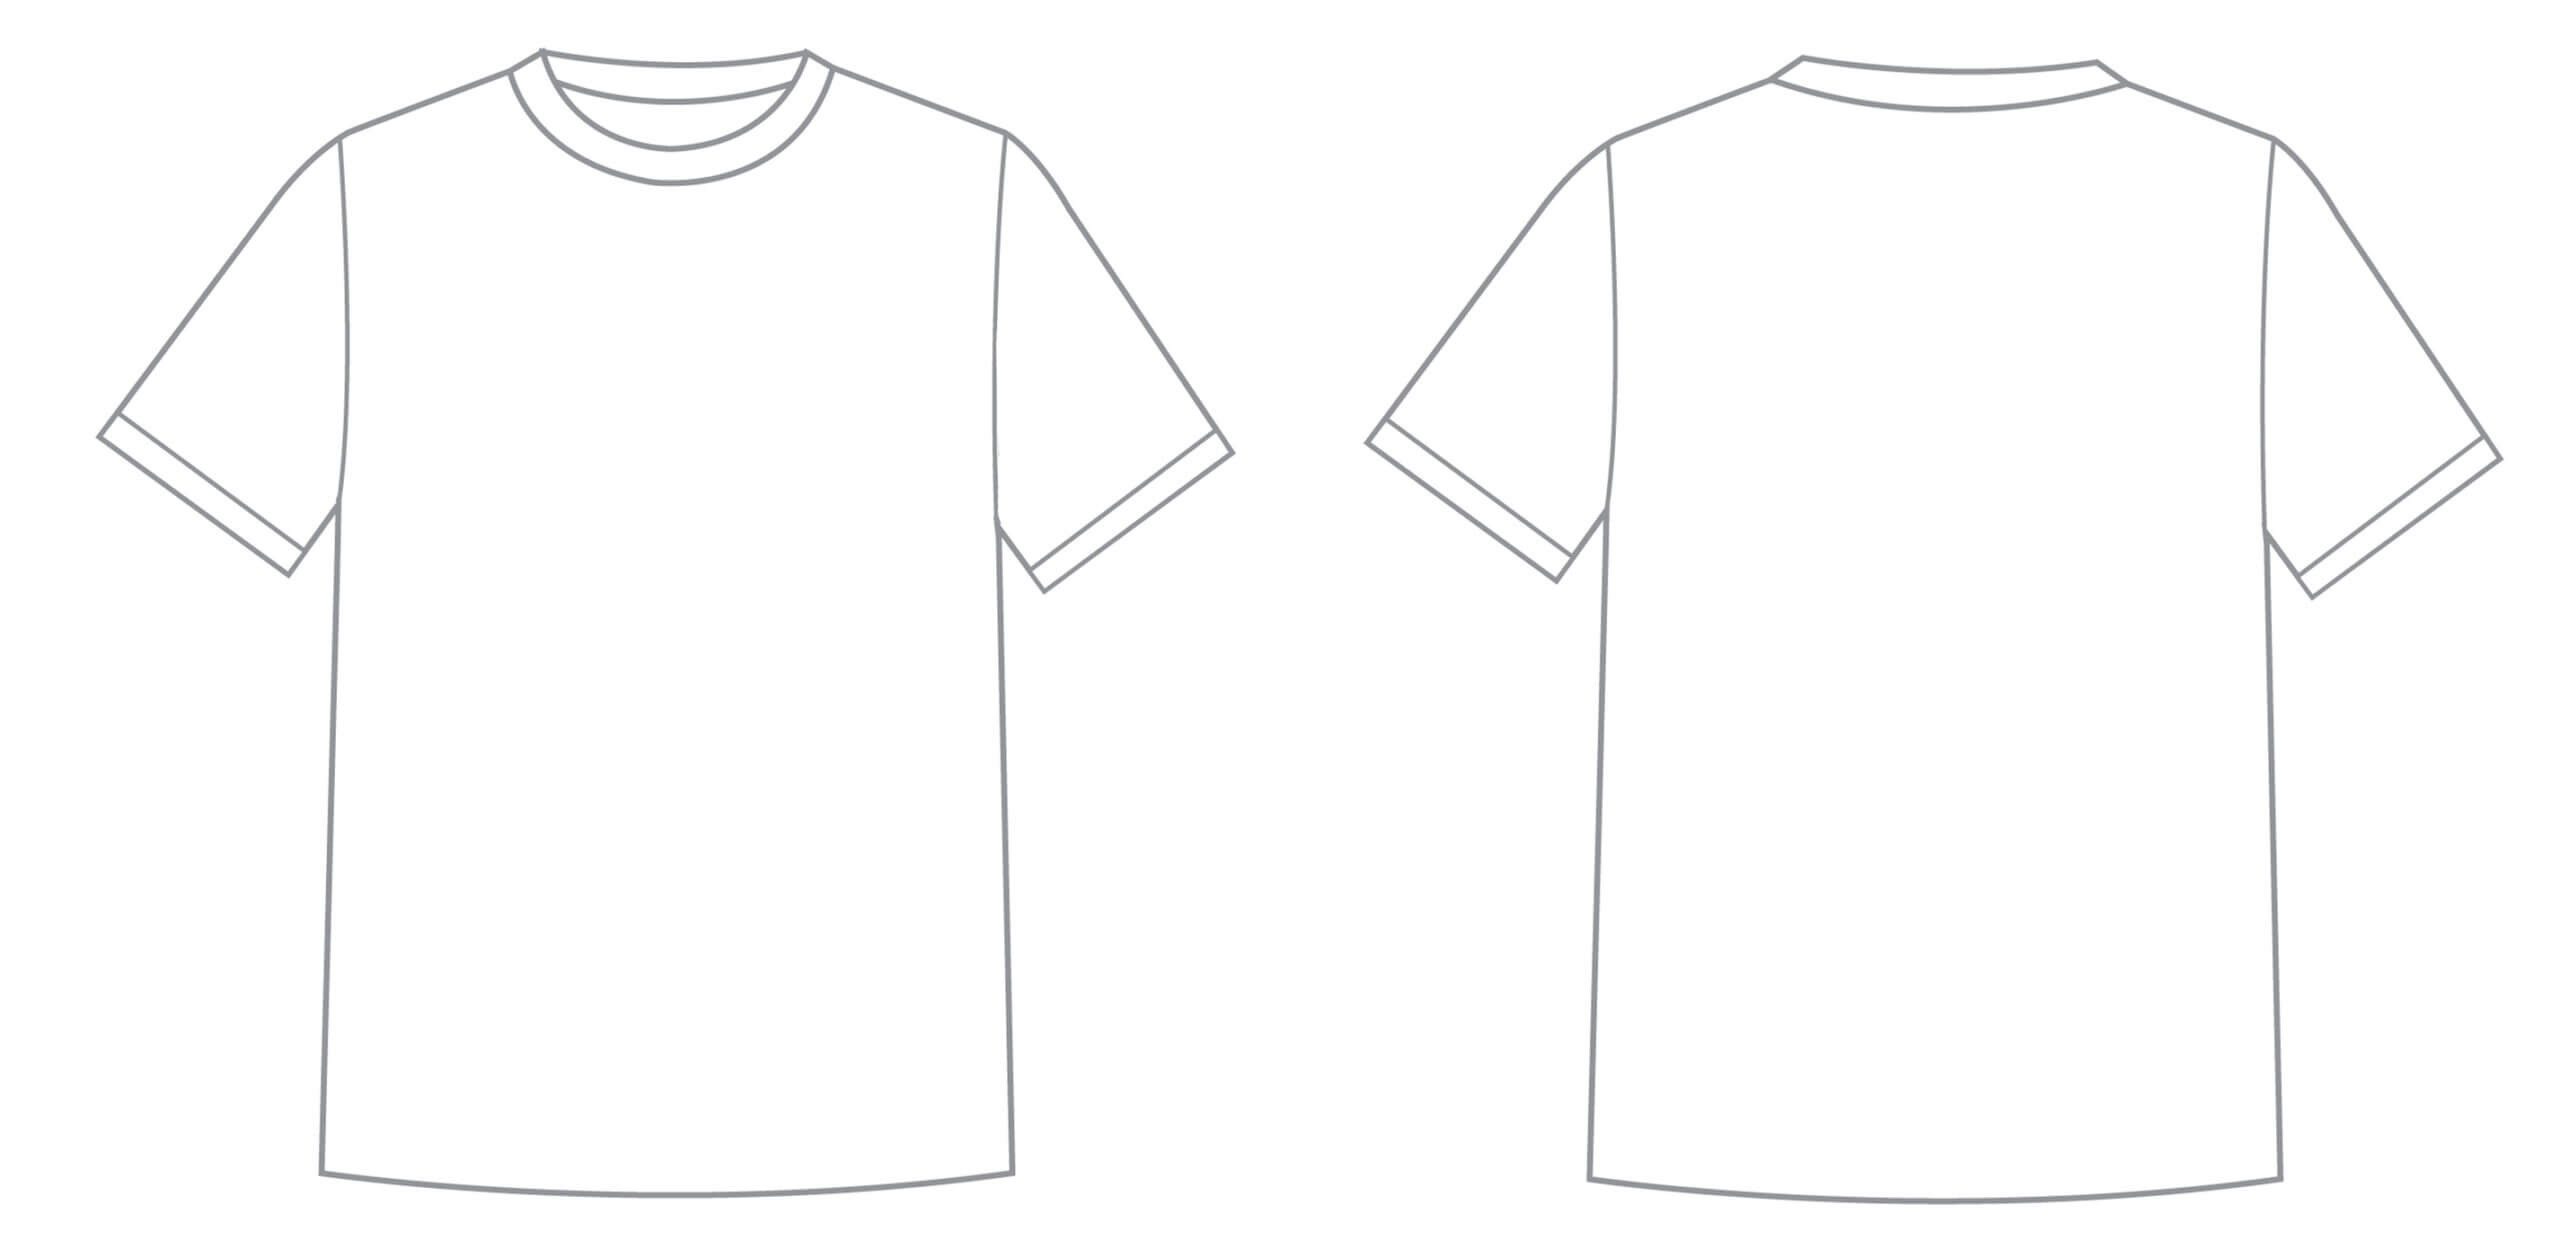 Polo T Shirt Template Pdf | Coolmine Community School Inside Blank Tshirt Template Pdf